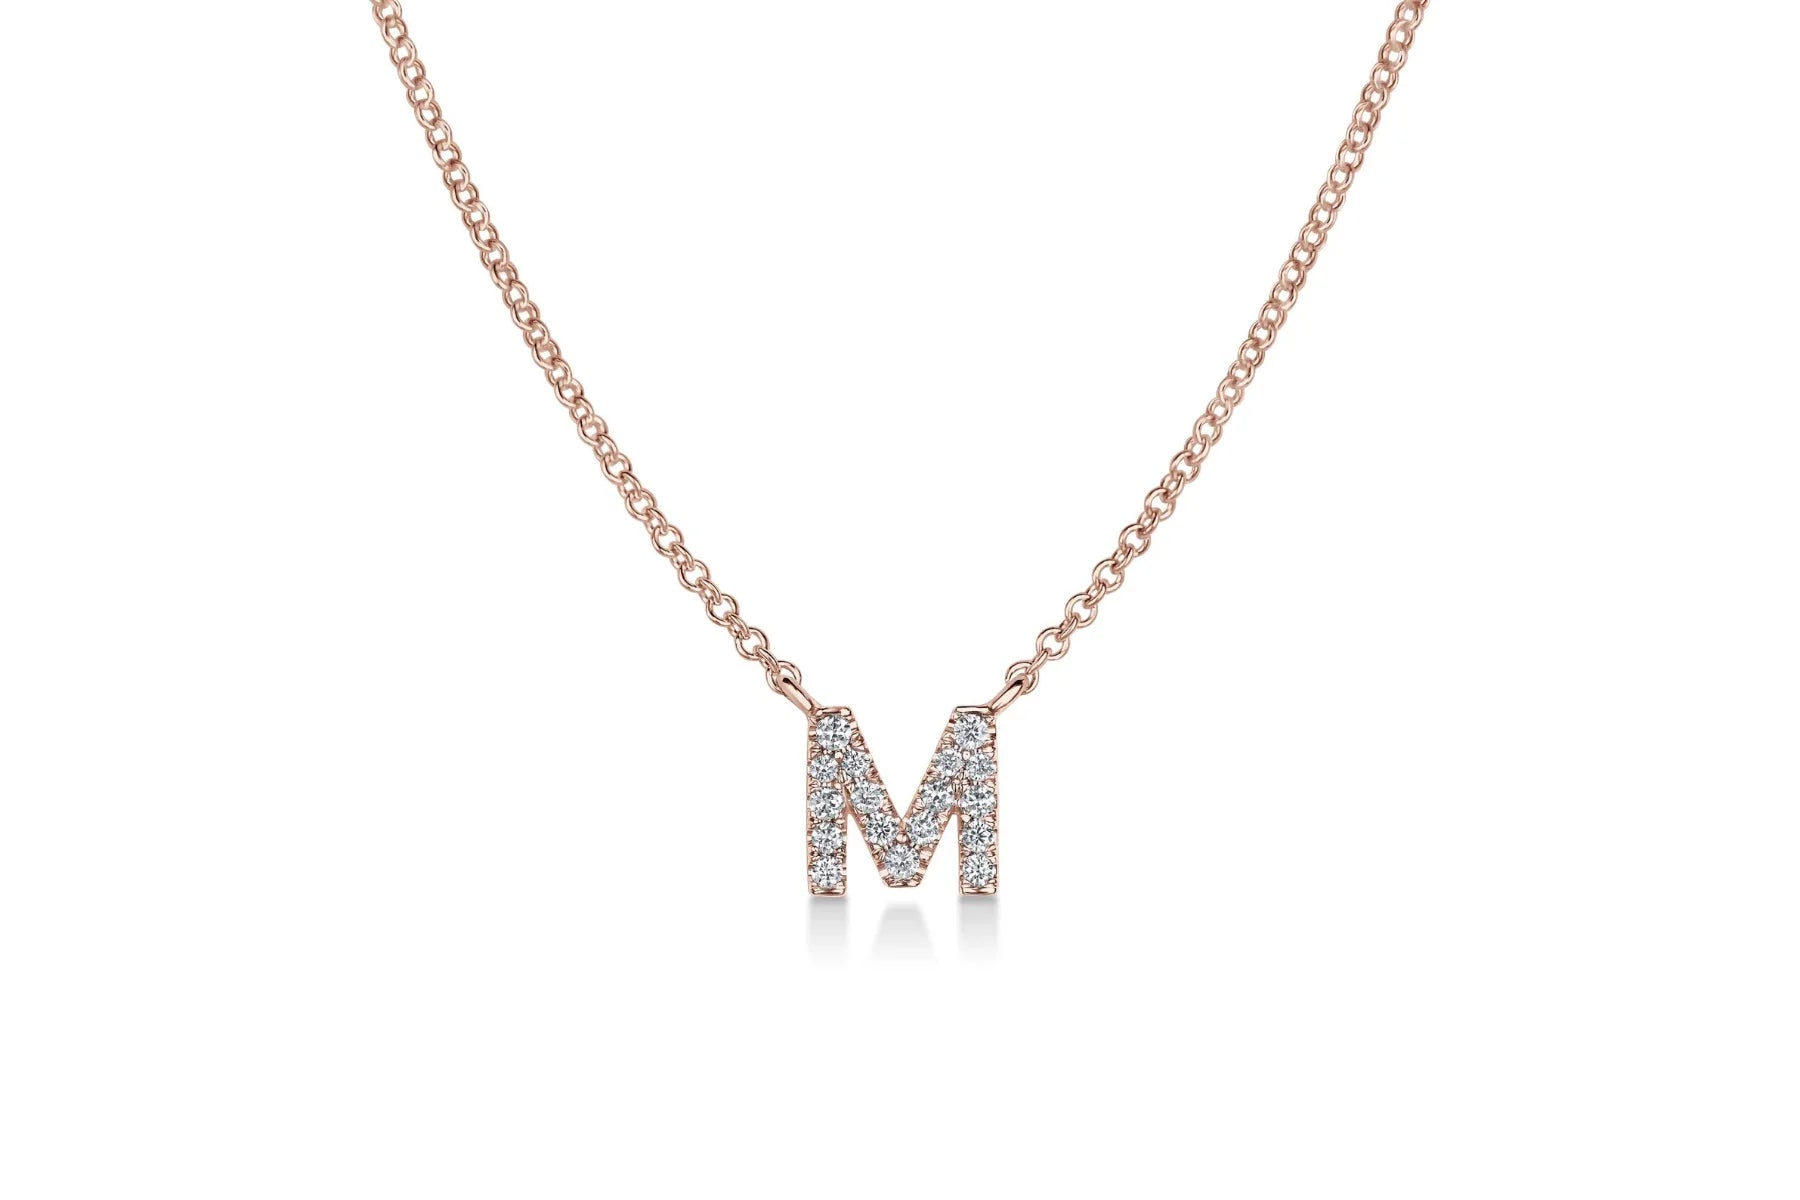 14Kt Gold 2 Initial Letter Genuine Natural Diamond Pendant Necklace | eBay